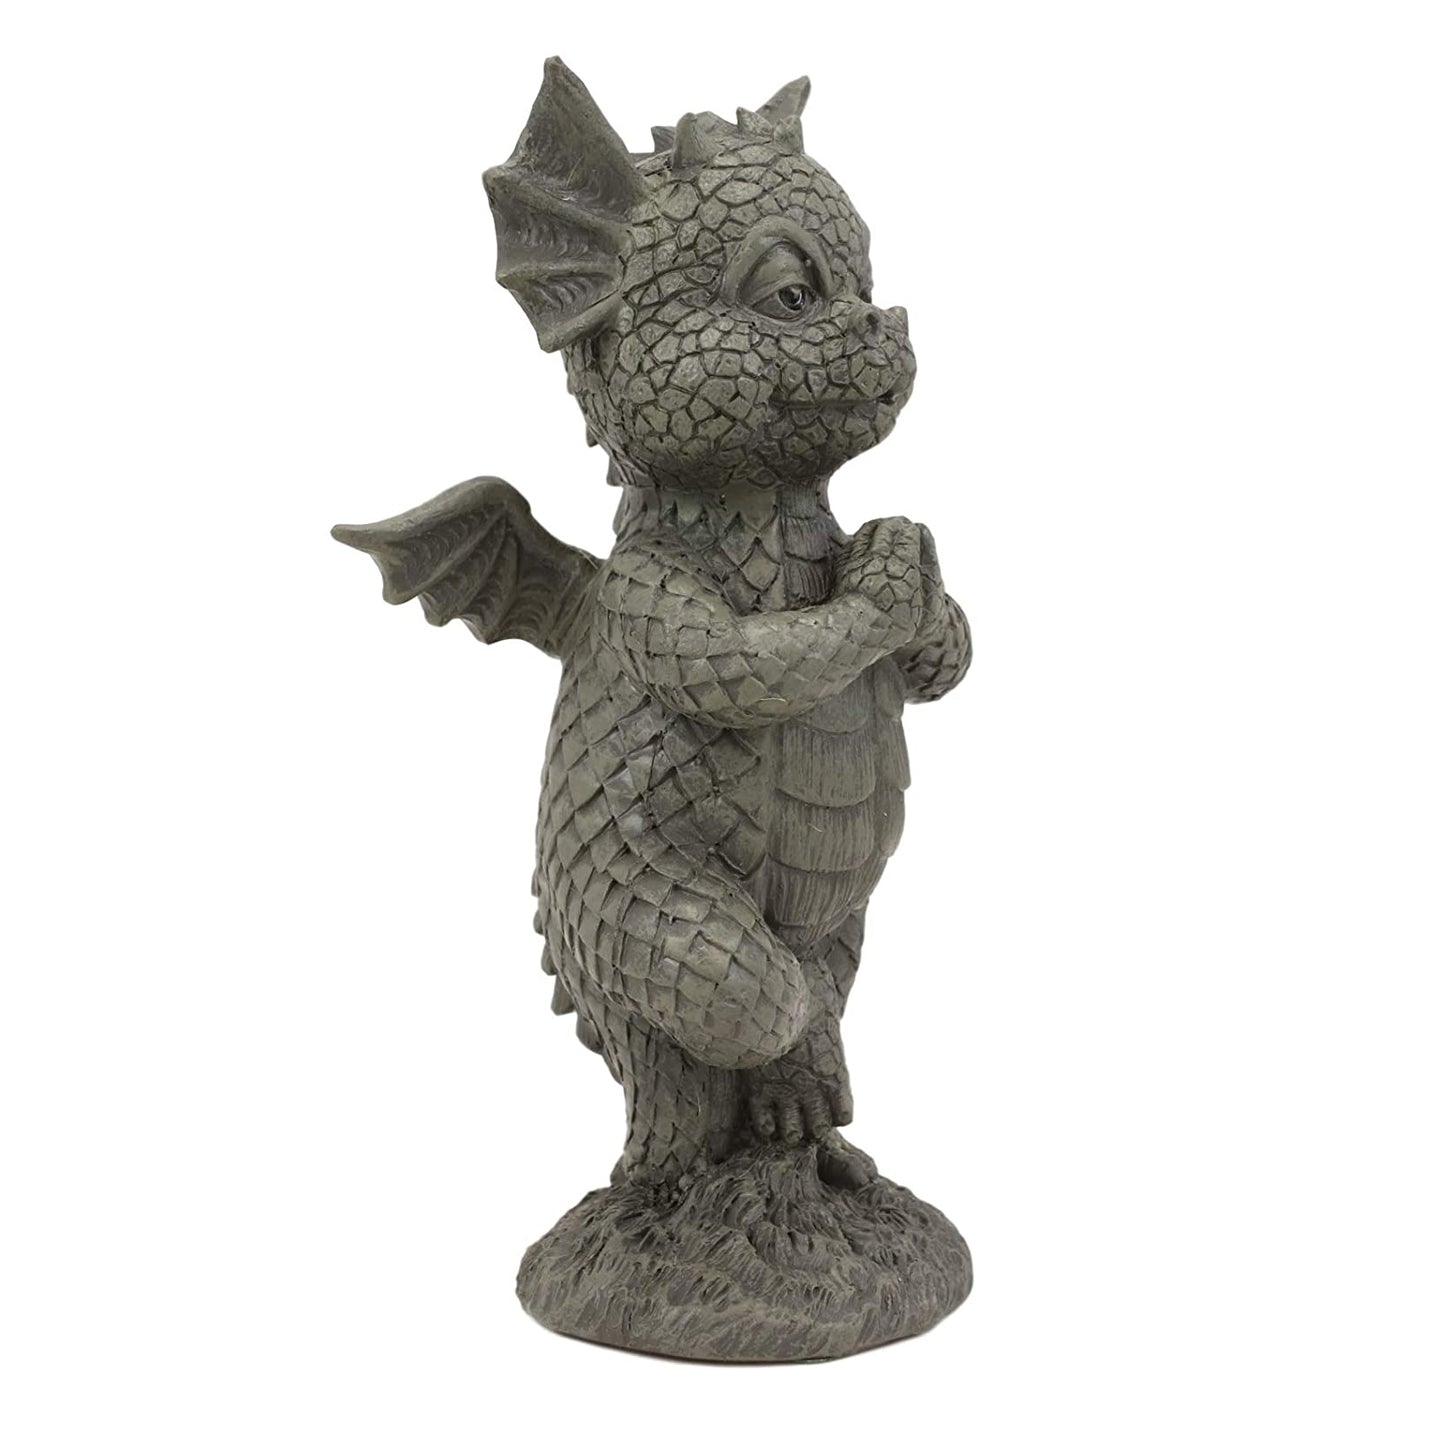 Small Yoga Dragon Figurine